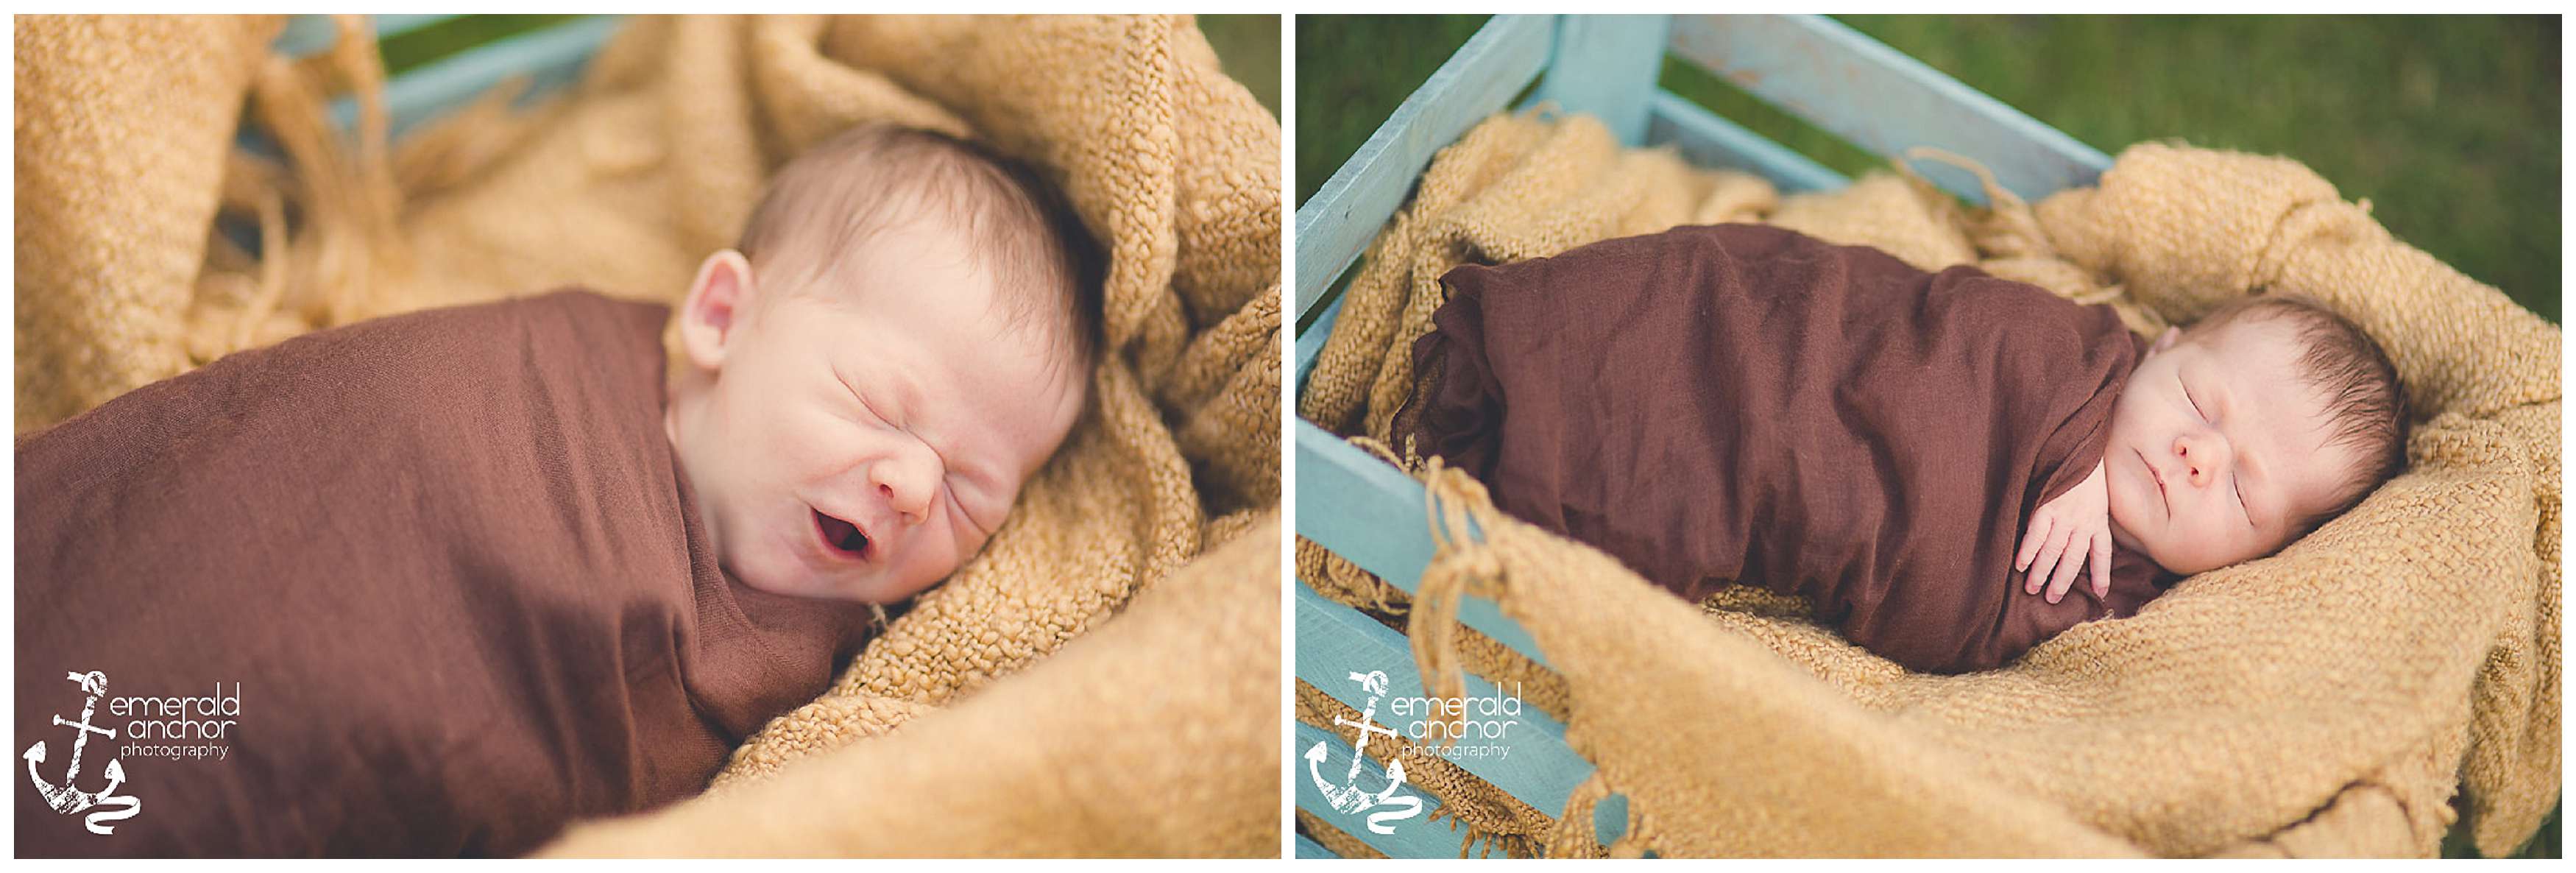 Emerald Anchor Photography Newborn Photography (5)